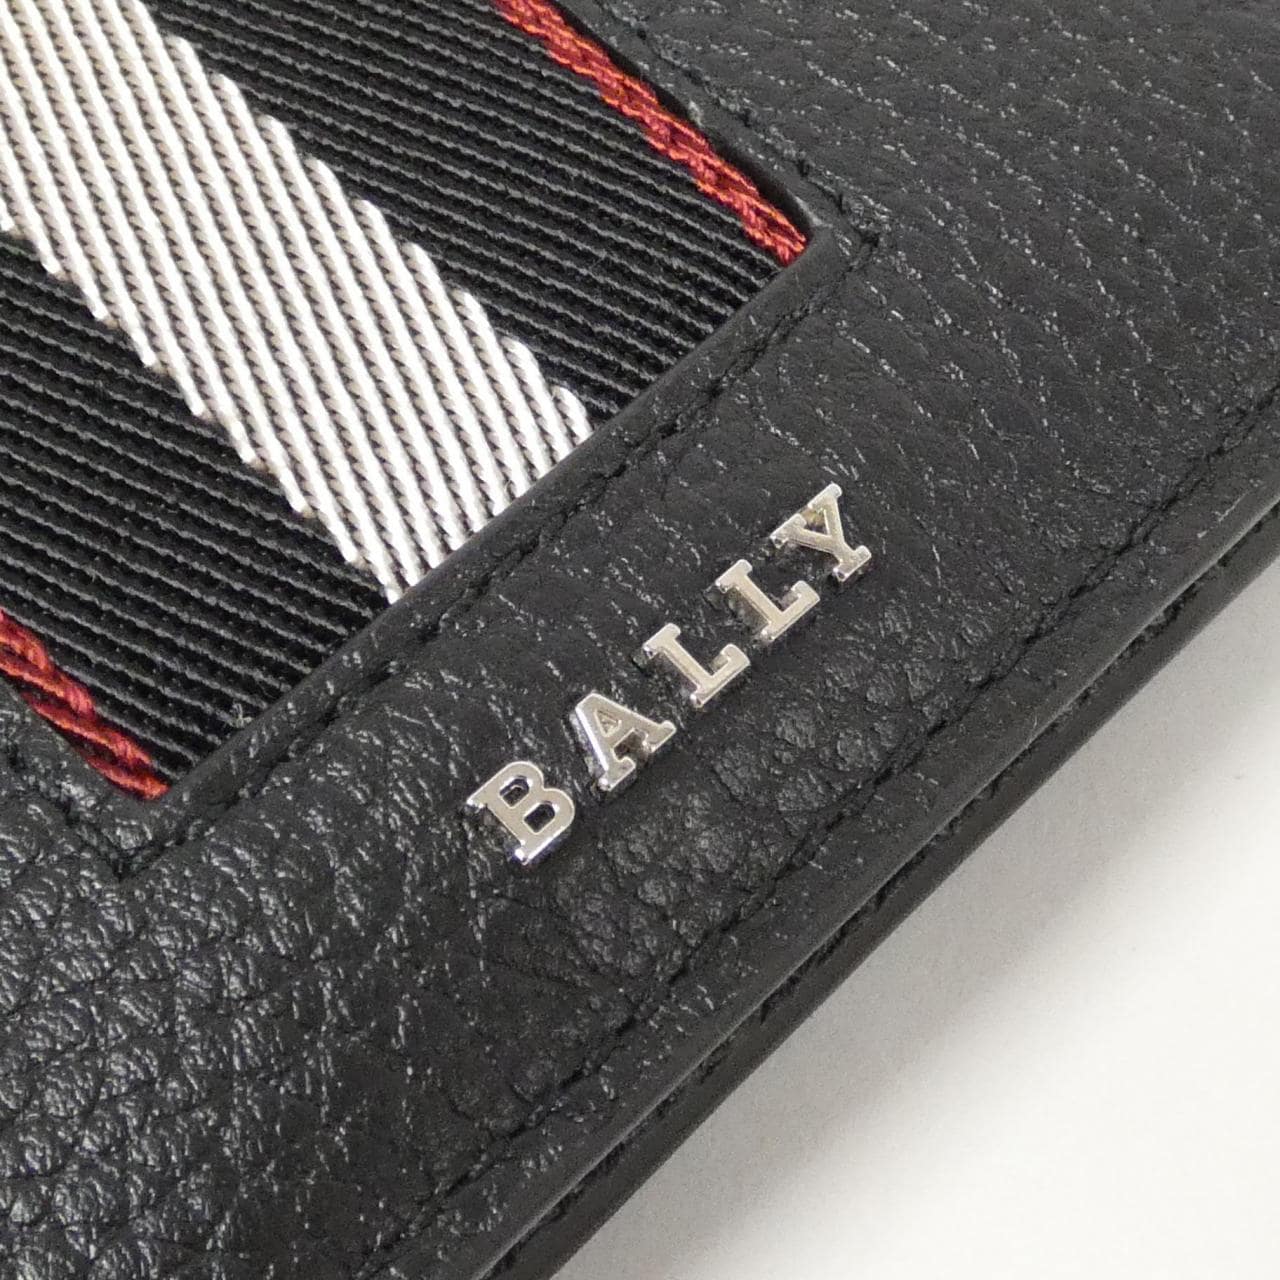 [BRAND NEW] Barry BRIBEL DSH Wallet